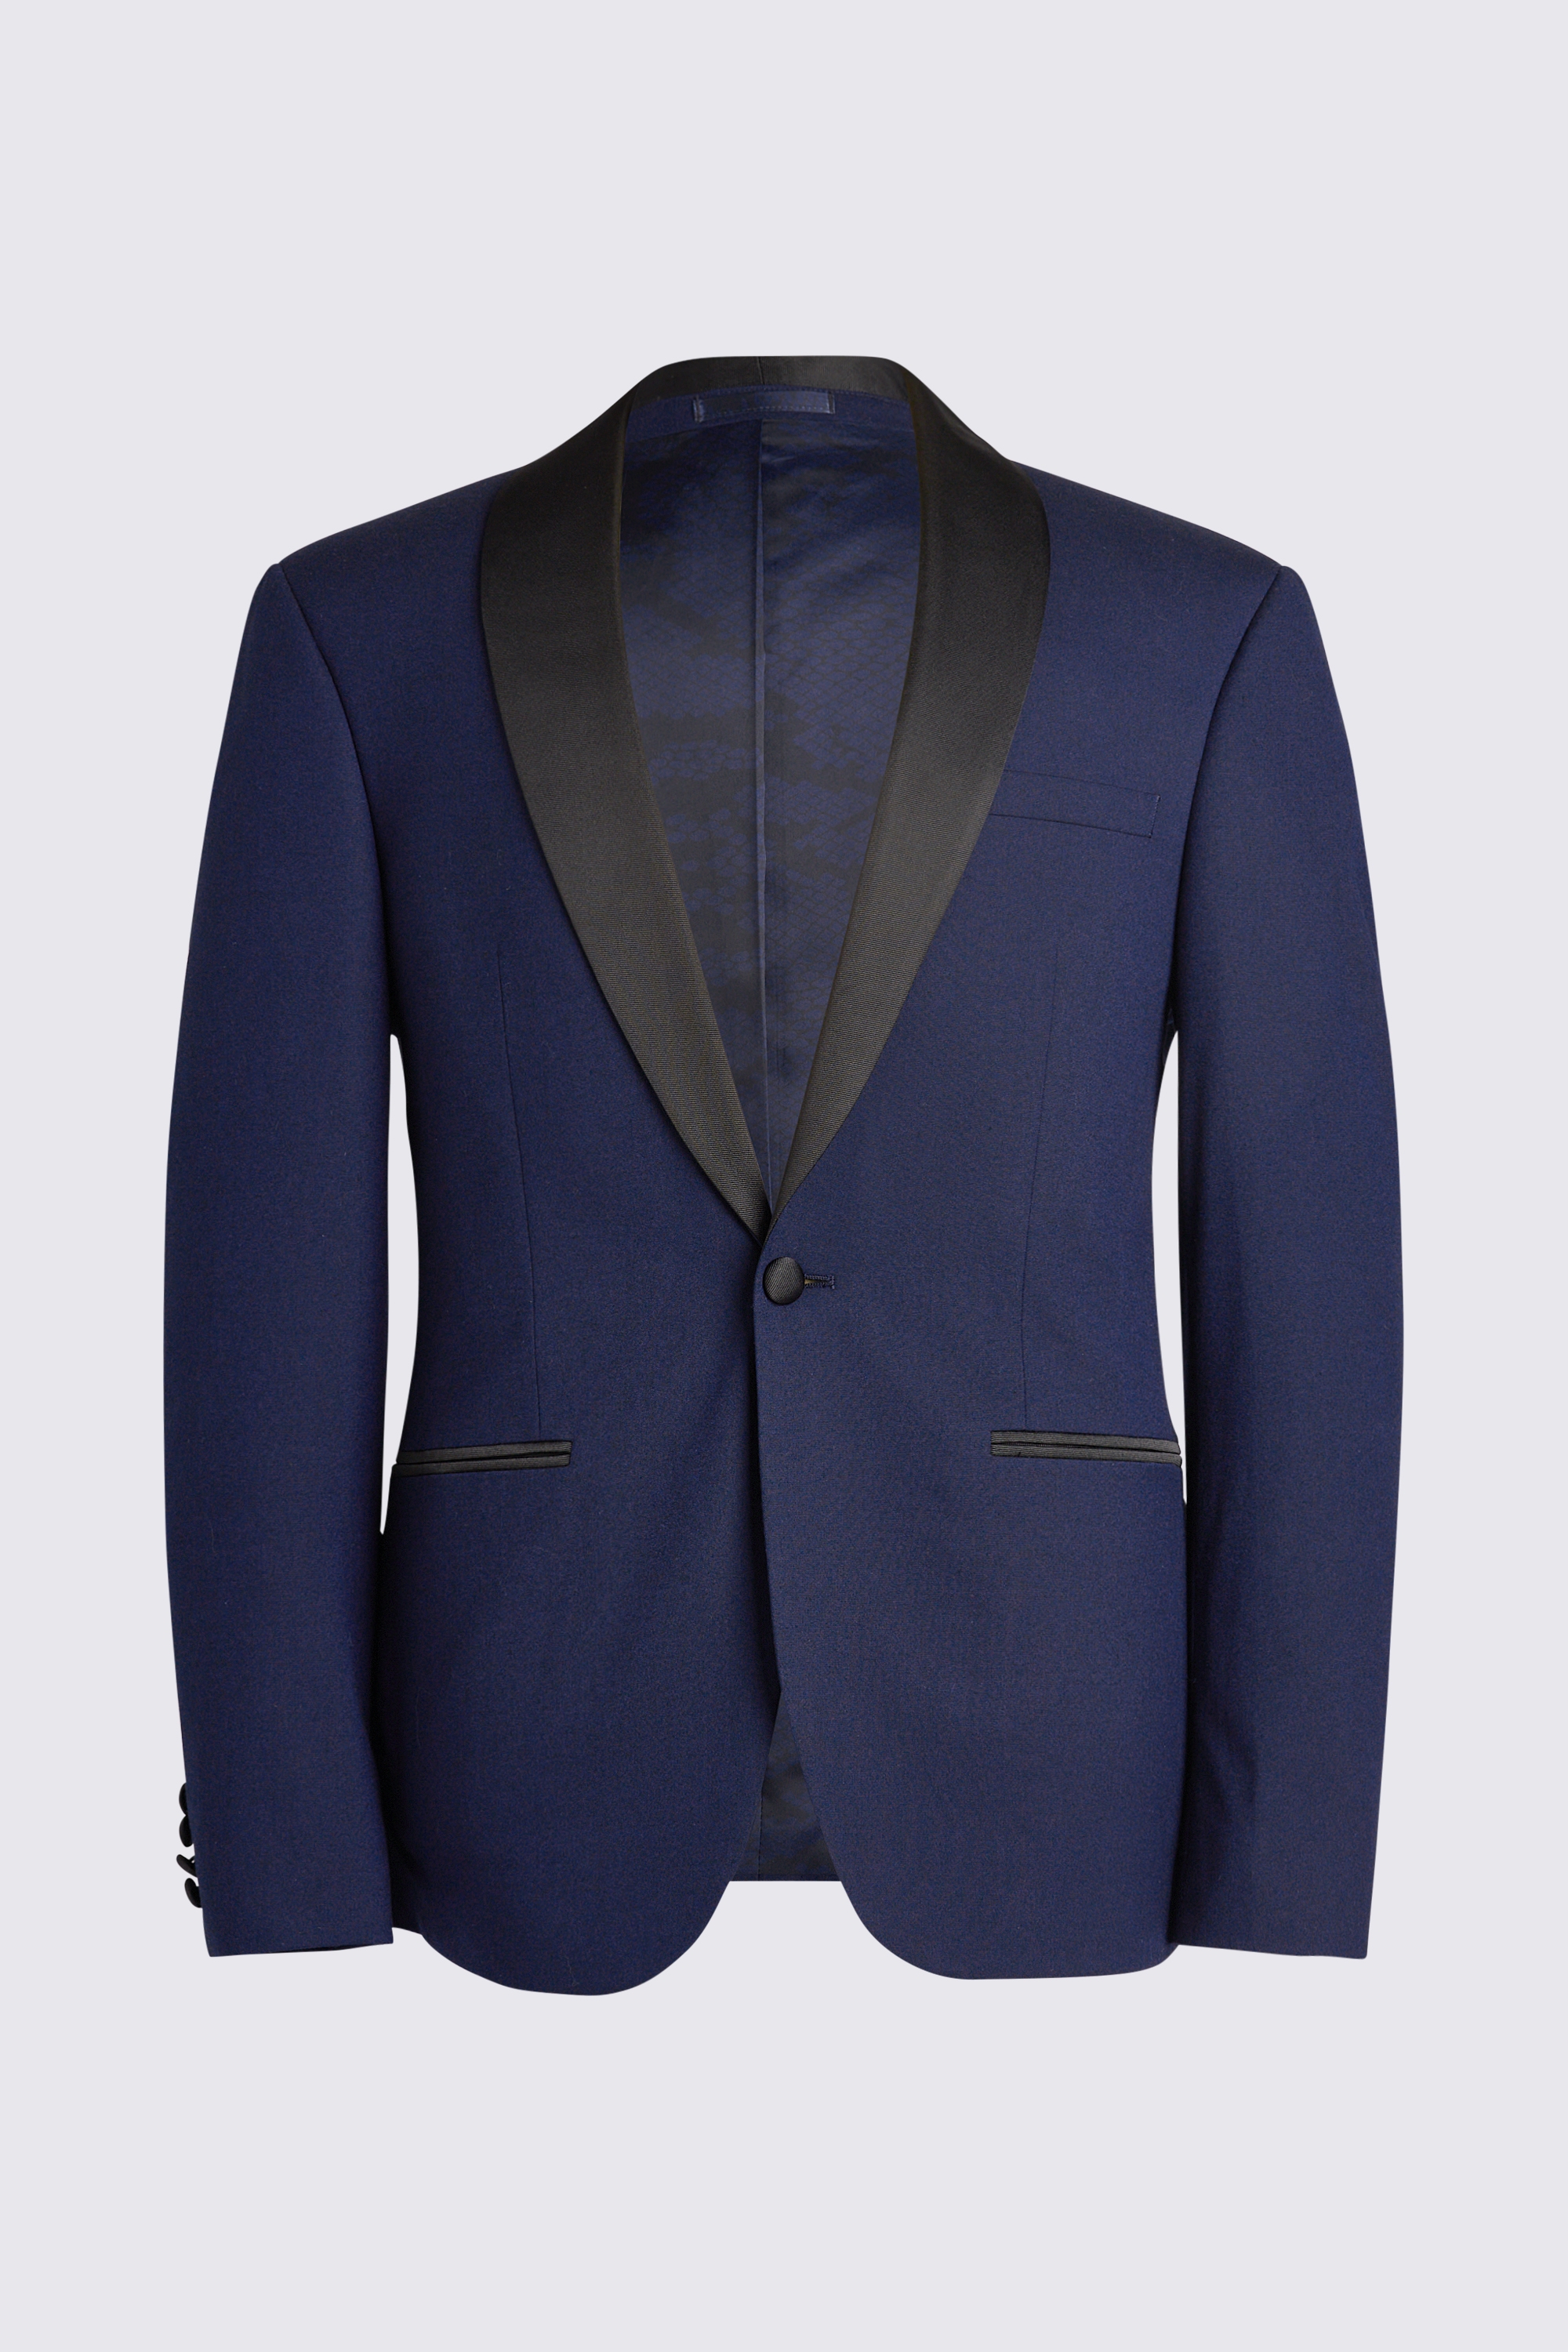 Slim Fit Navy Tuxedo Jacket | Buy Online at Moss